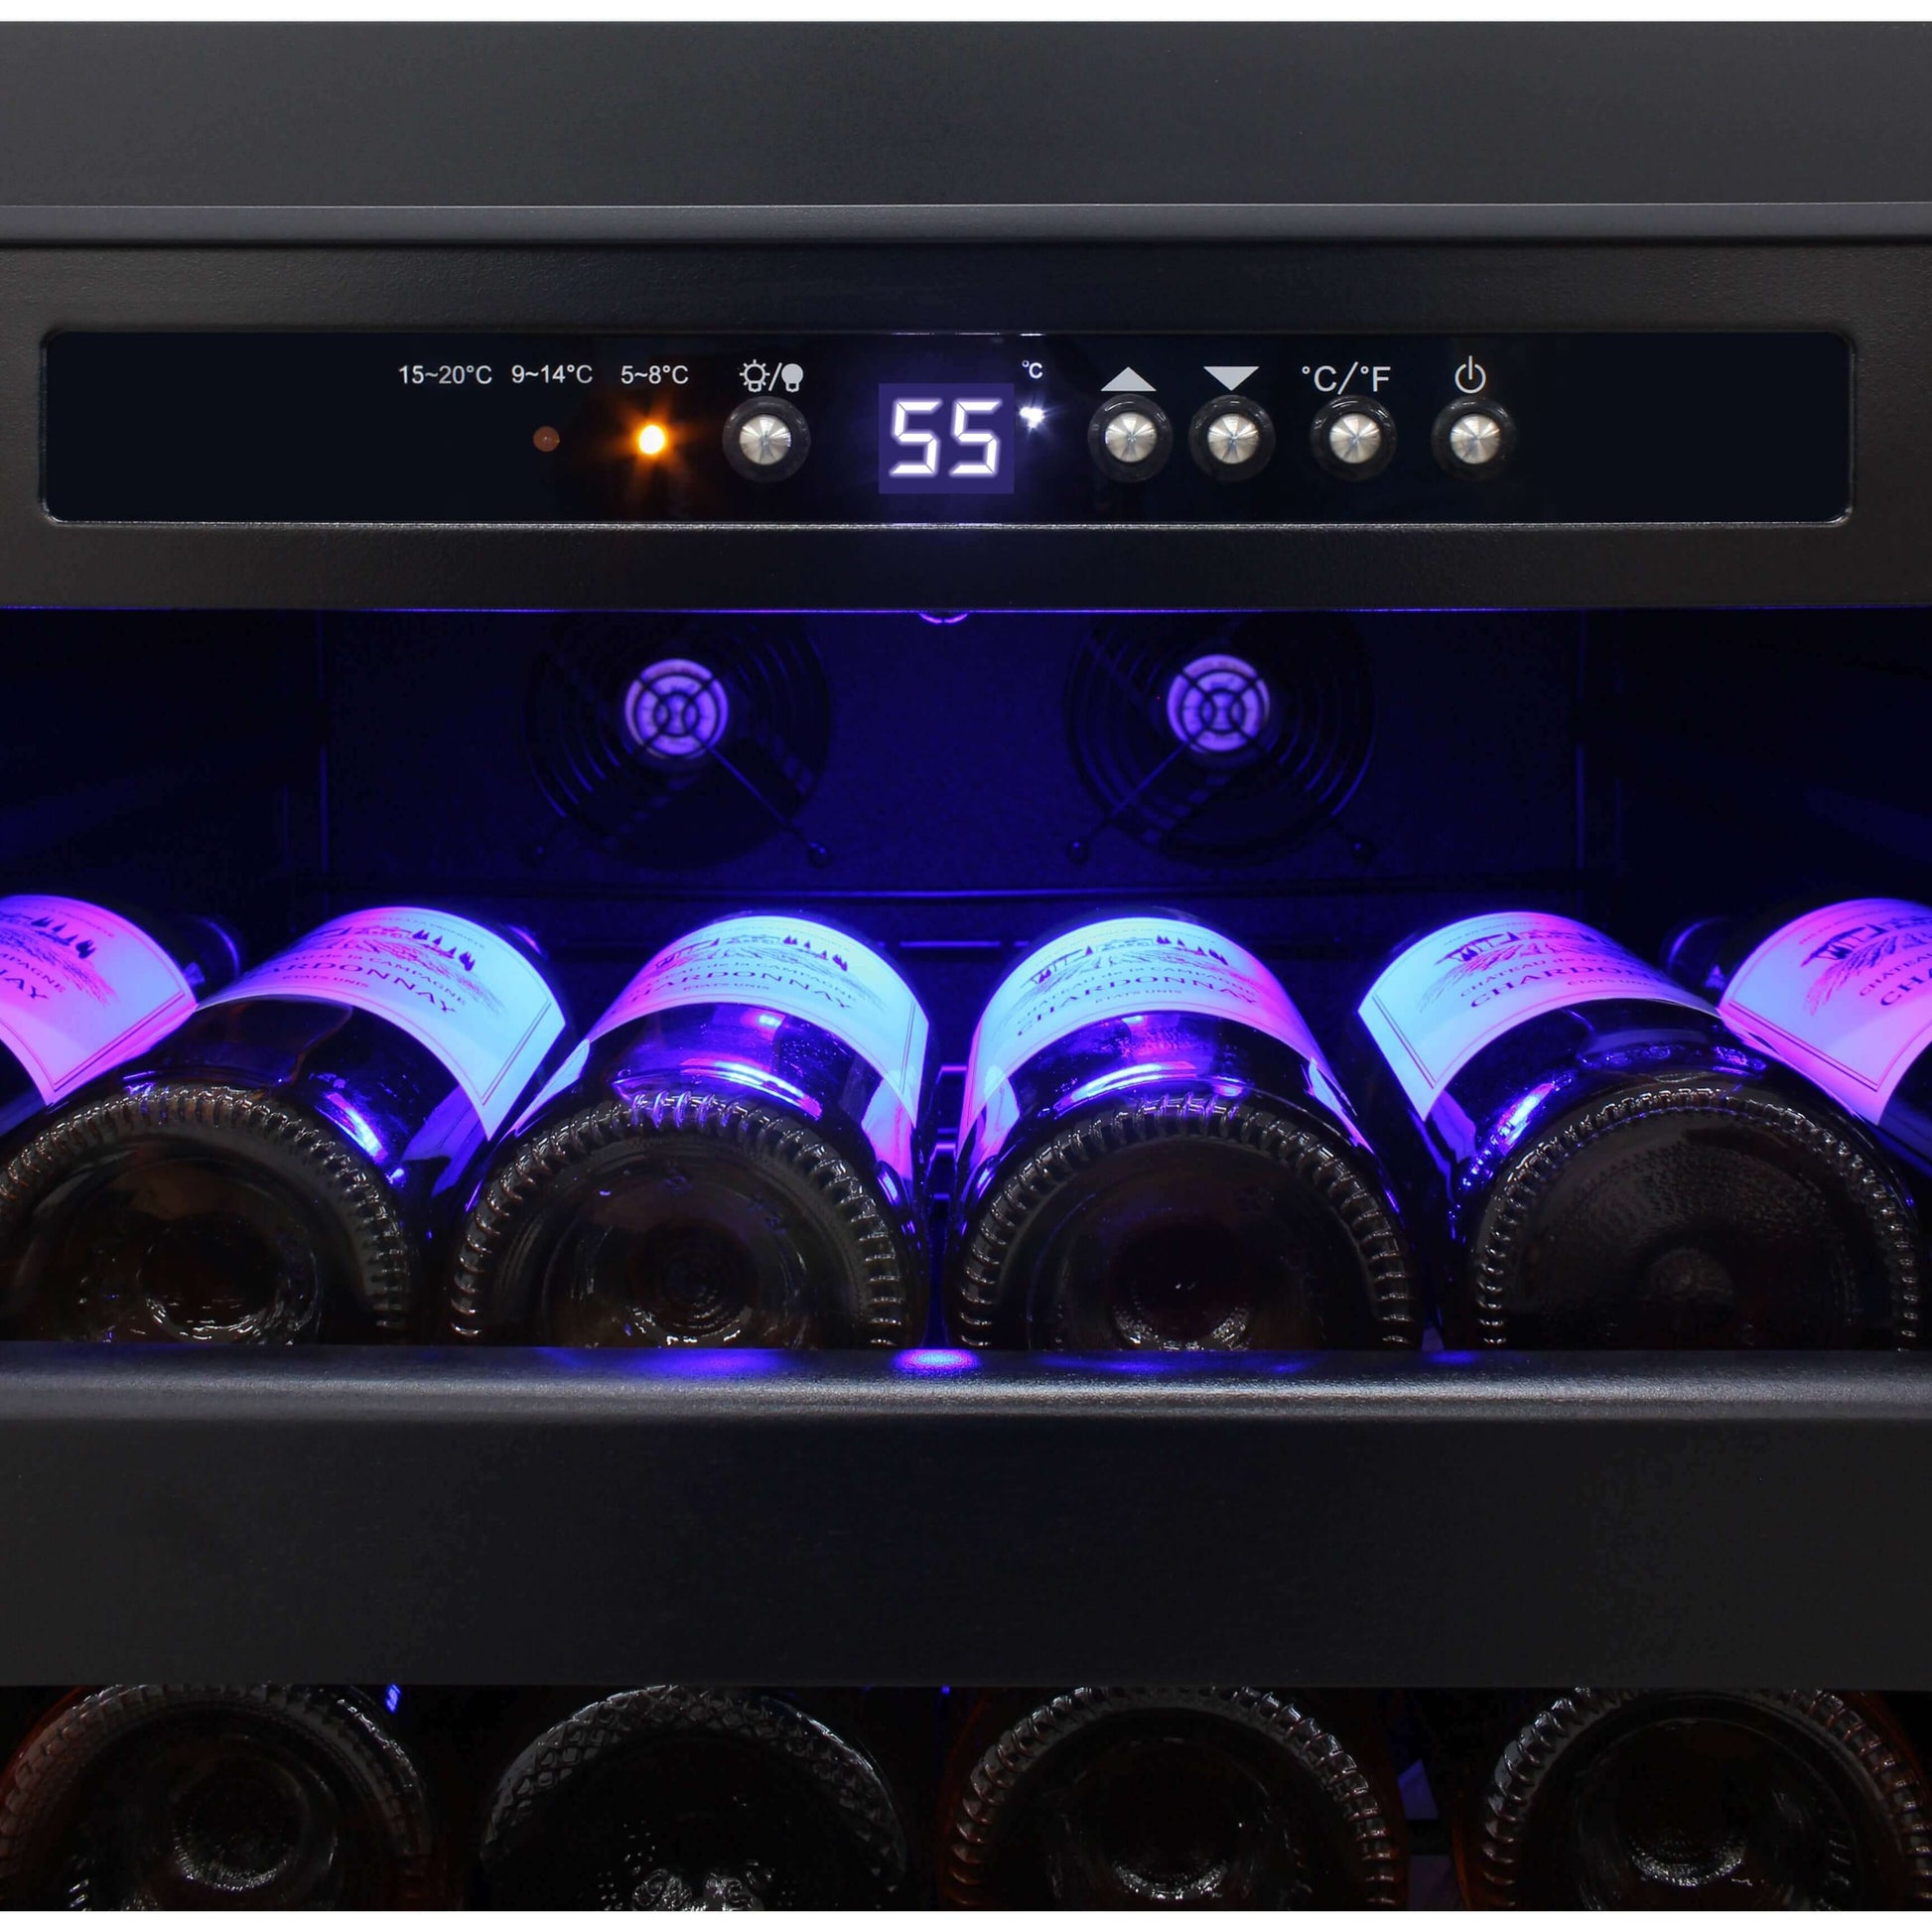 Vinotemp 114-Bottle Freestanding Single-Zone Wine Cooler